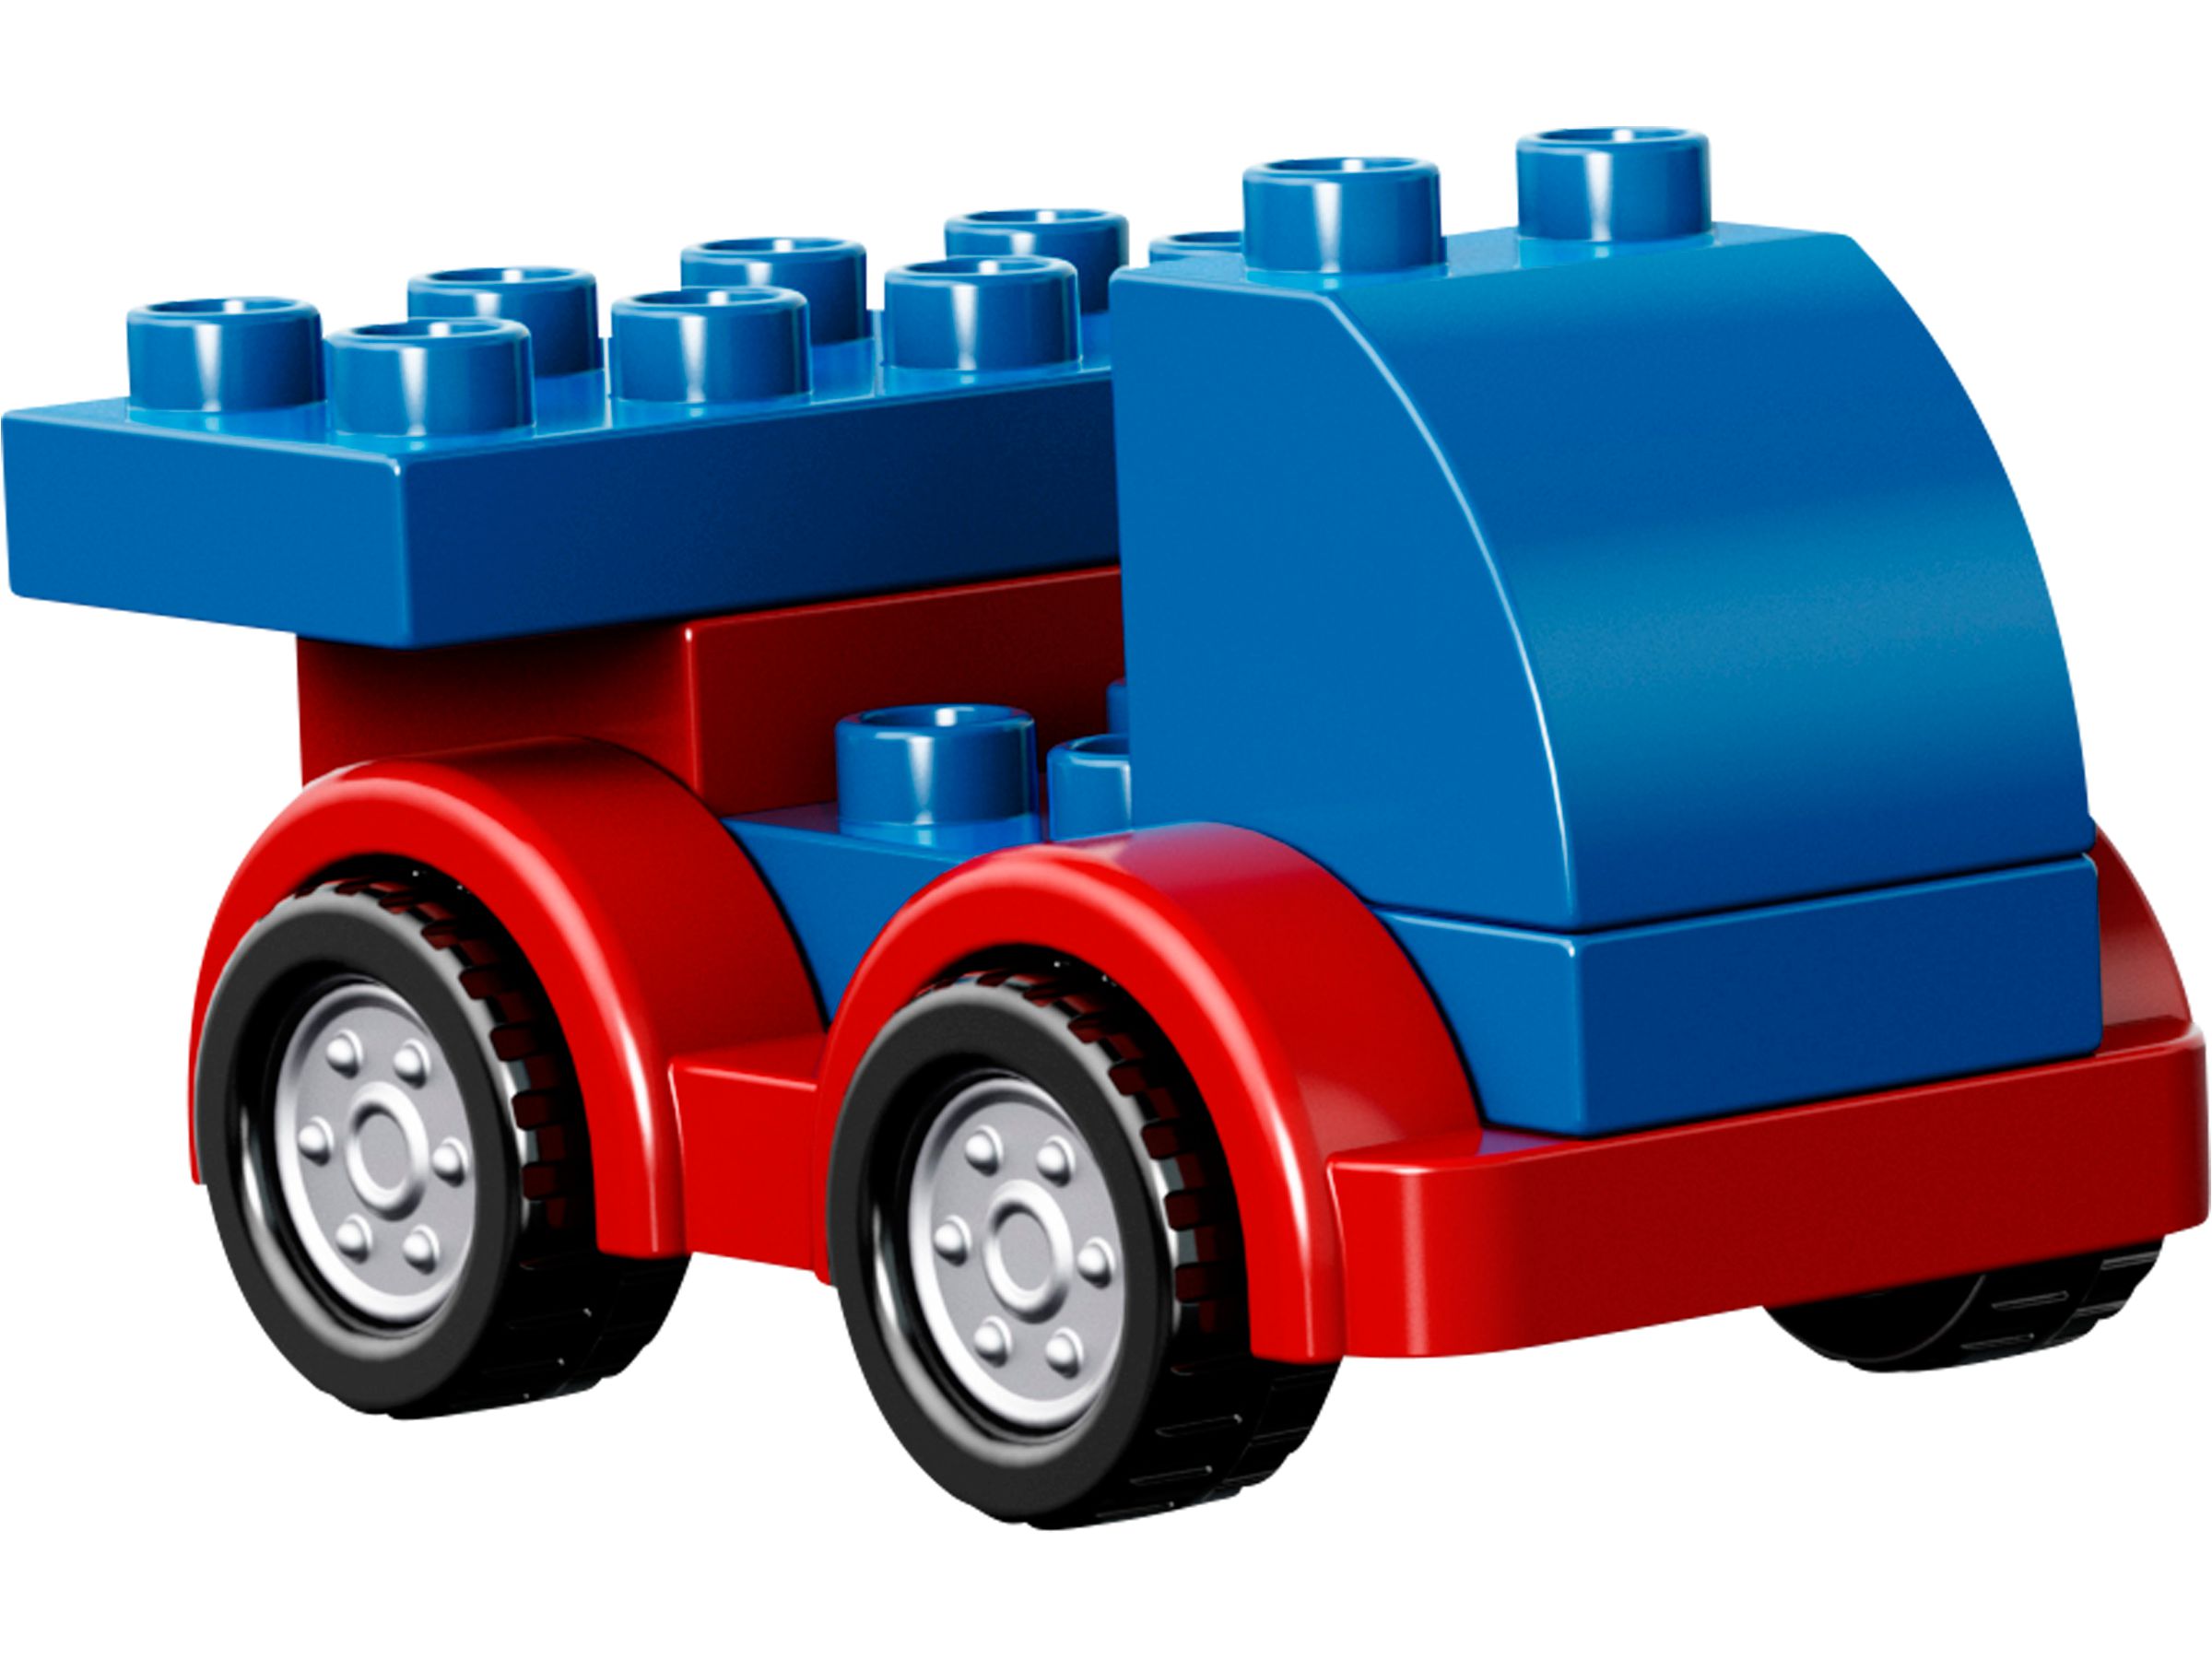 LEGO Duplo 10580 LEGO® DUPLO® Deluxe Steinebox LEGO_10580_alt6.jpg